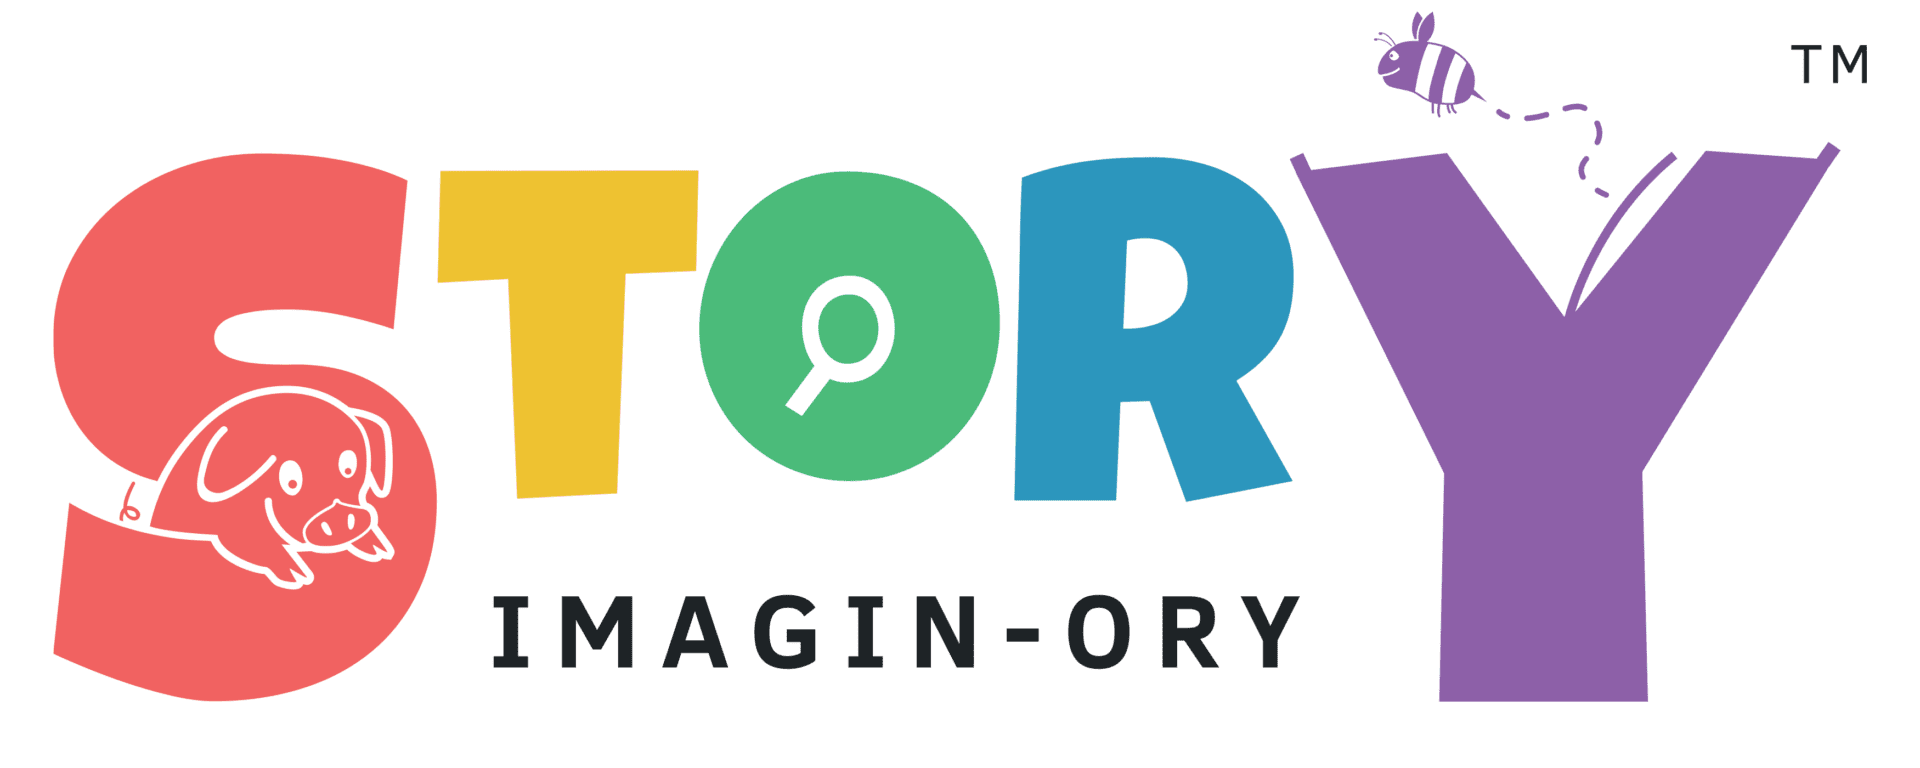 Story Imagin-ory 